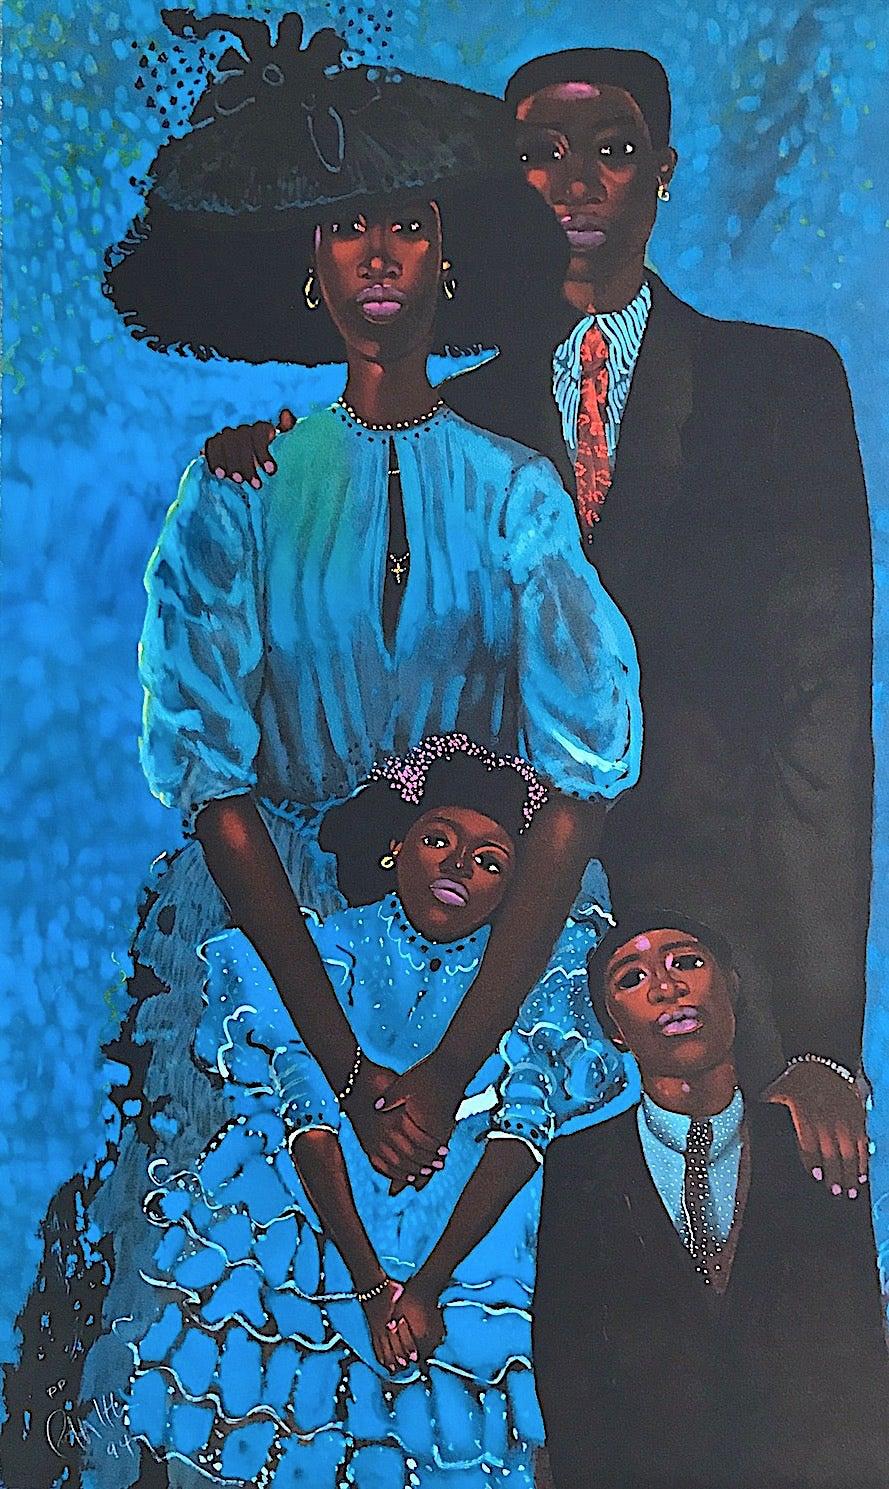 Geoffrey Holder Portrait Print - FAMILY IN BLUE Signed Lithograph, Black Family Portrait, Azure Blue, Warm Brown